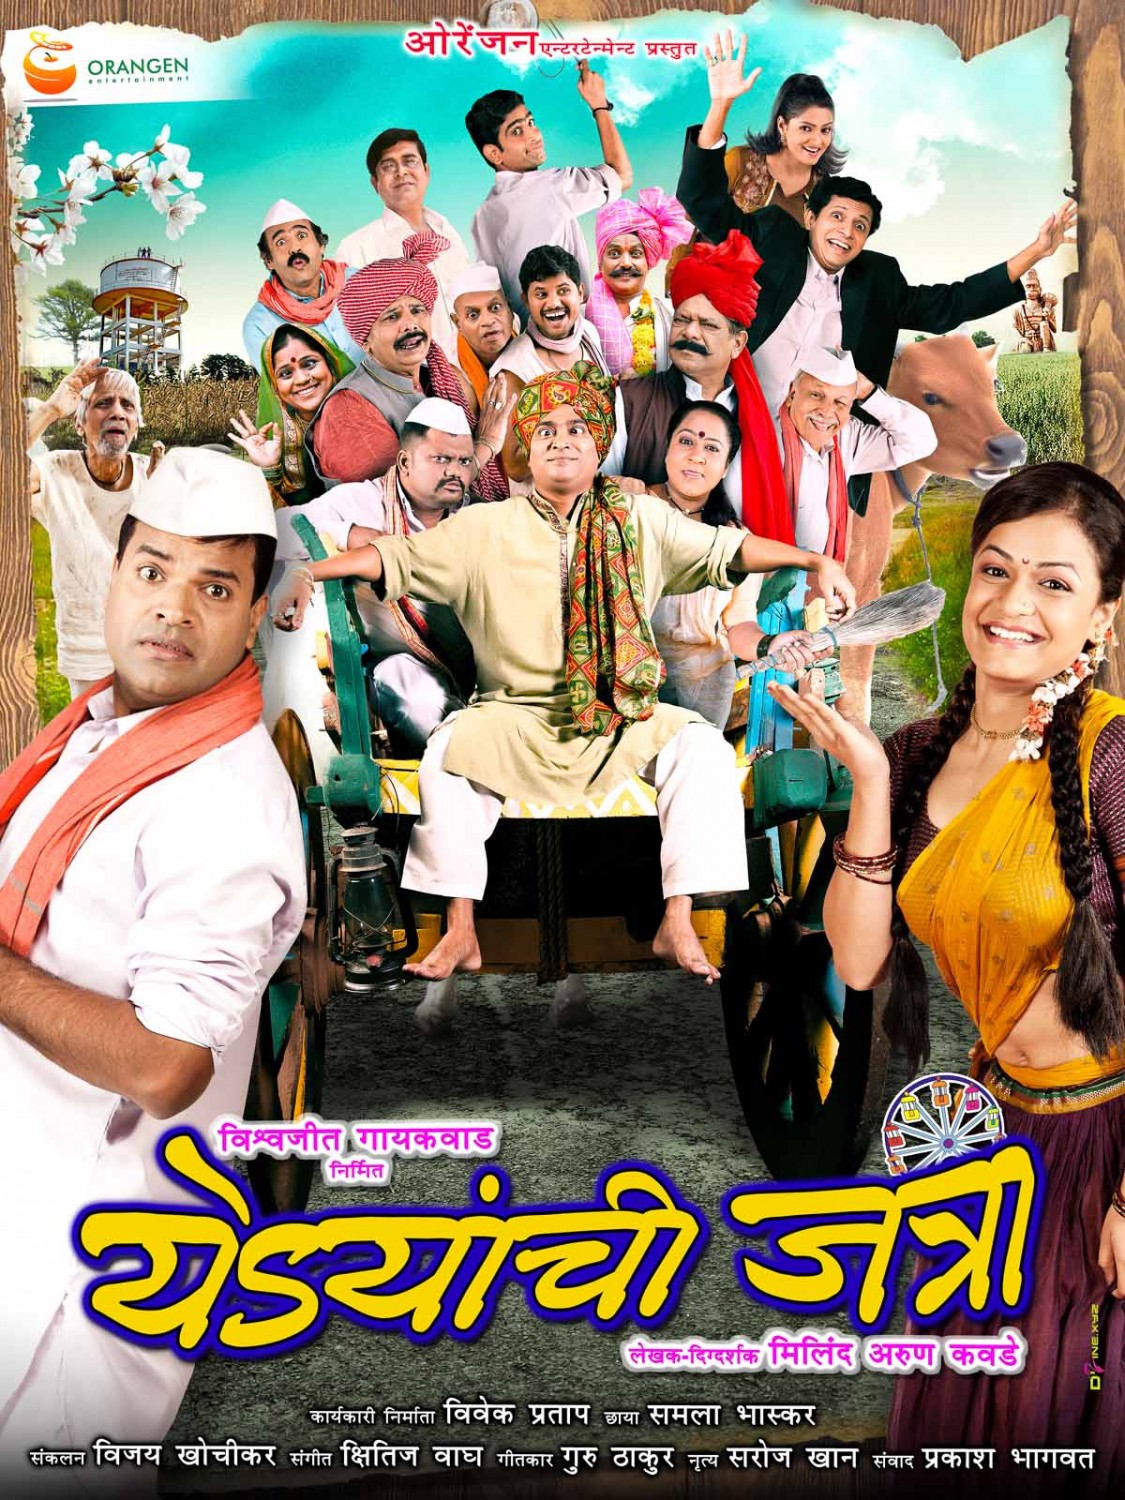 Extra Large Movie Poster Image for Yedyanchi Jatraa (#3 of 7)